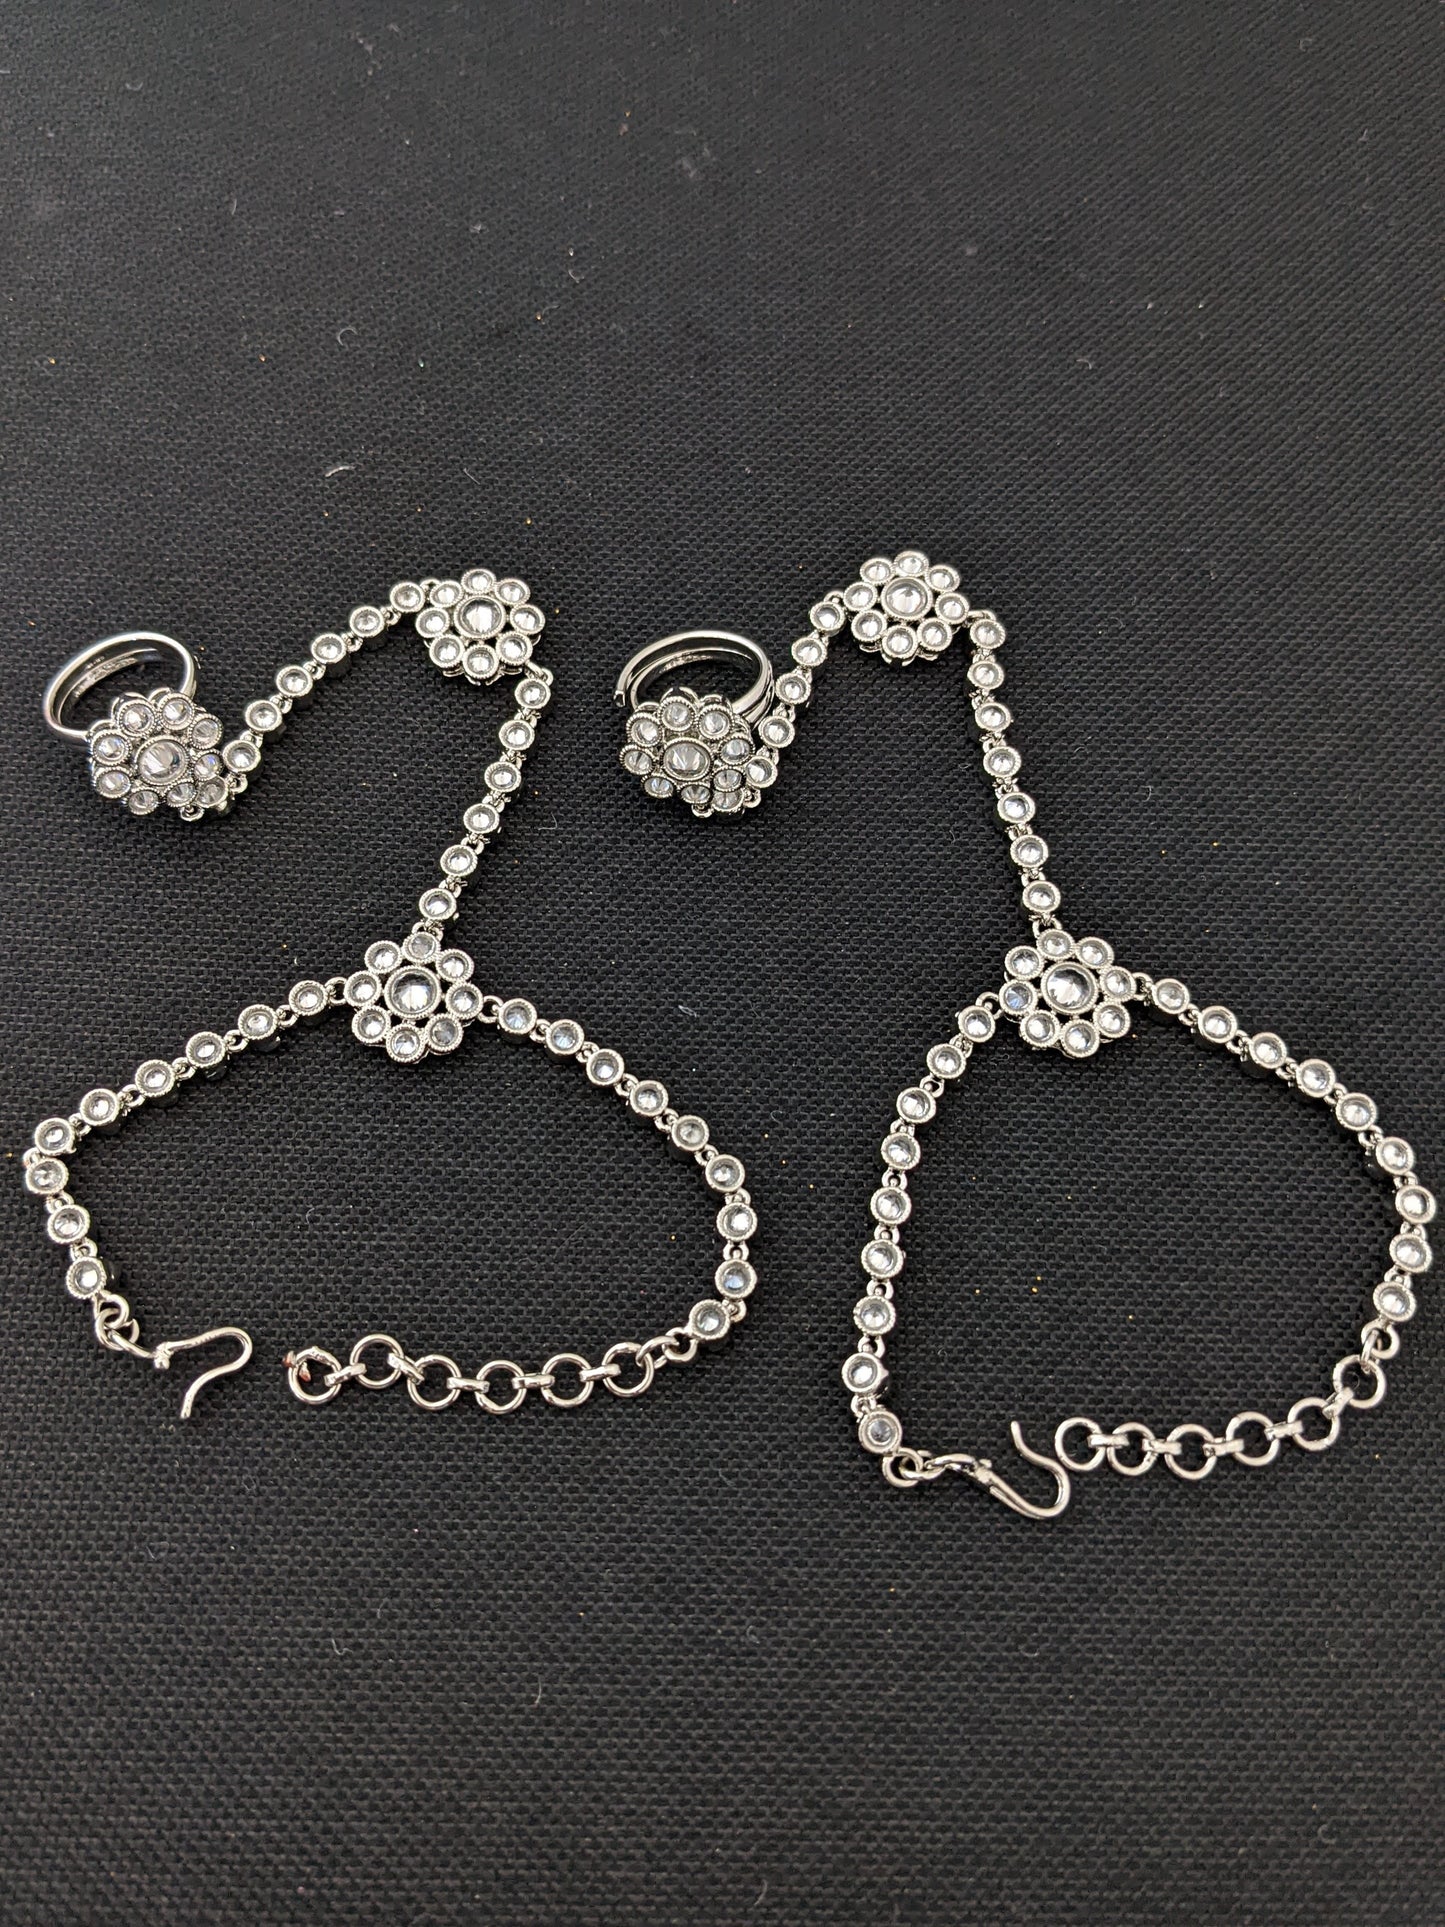 Silver rhodium Polki Haath Phool / Bracelet Ring Combo / Indian Wedding Jewelry